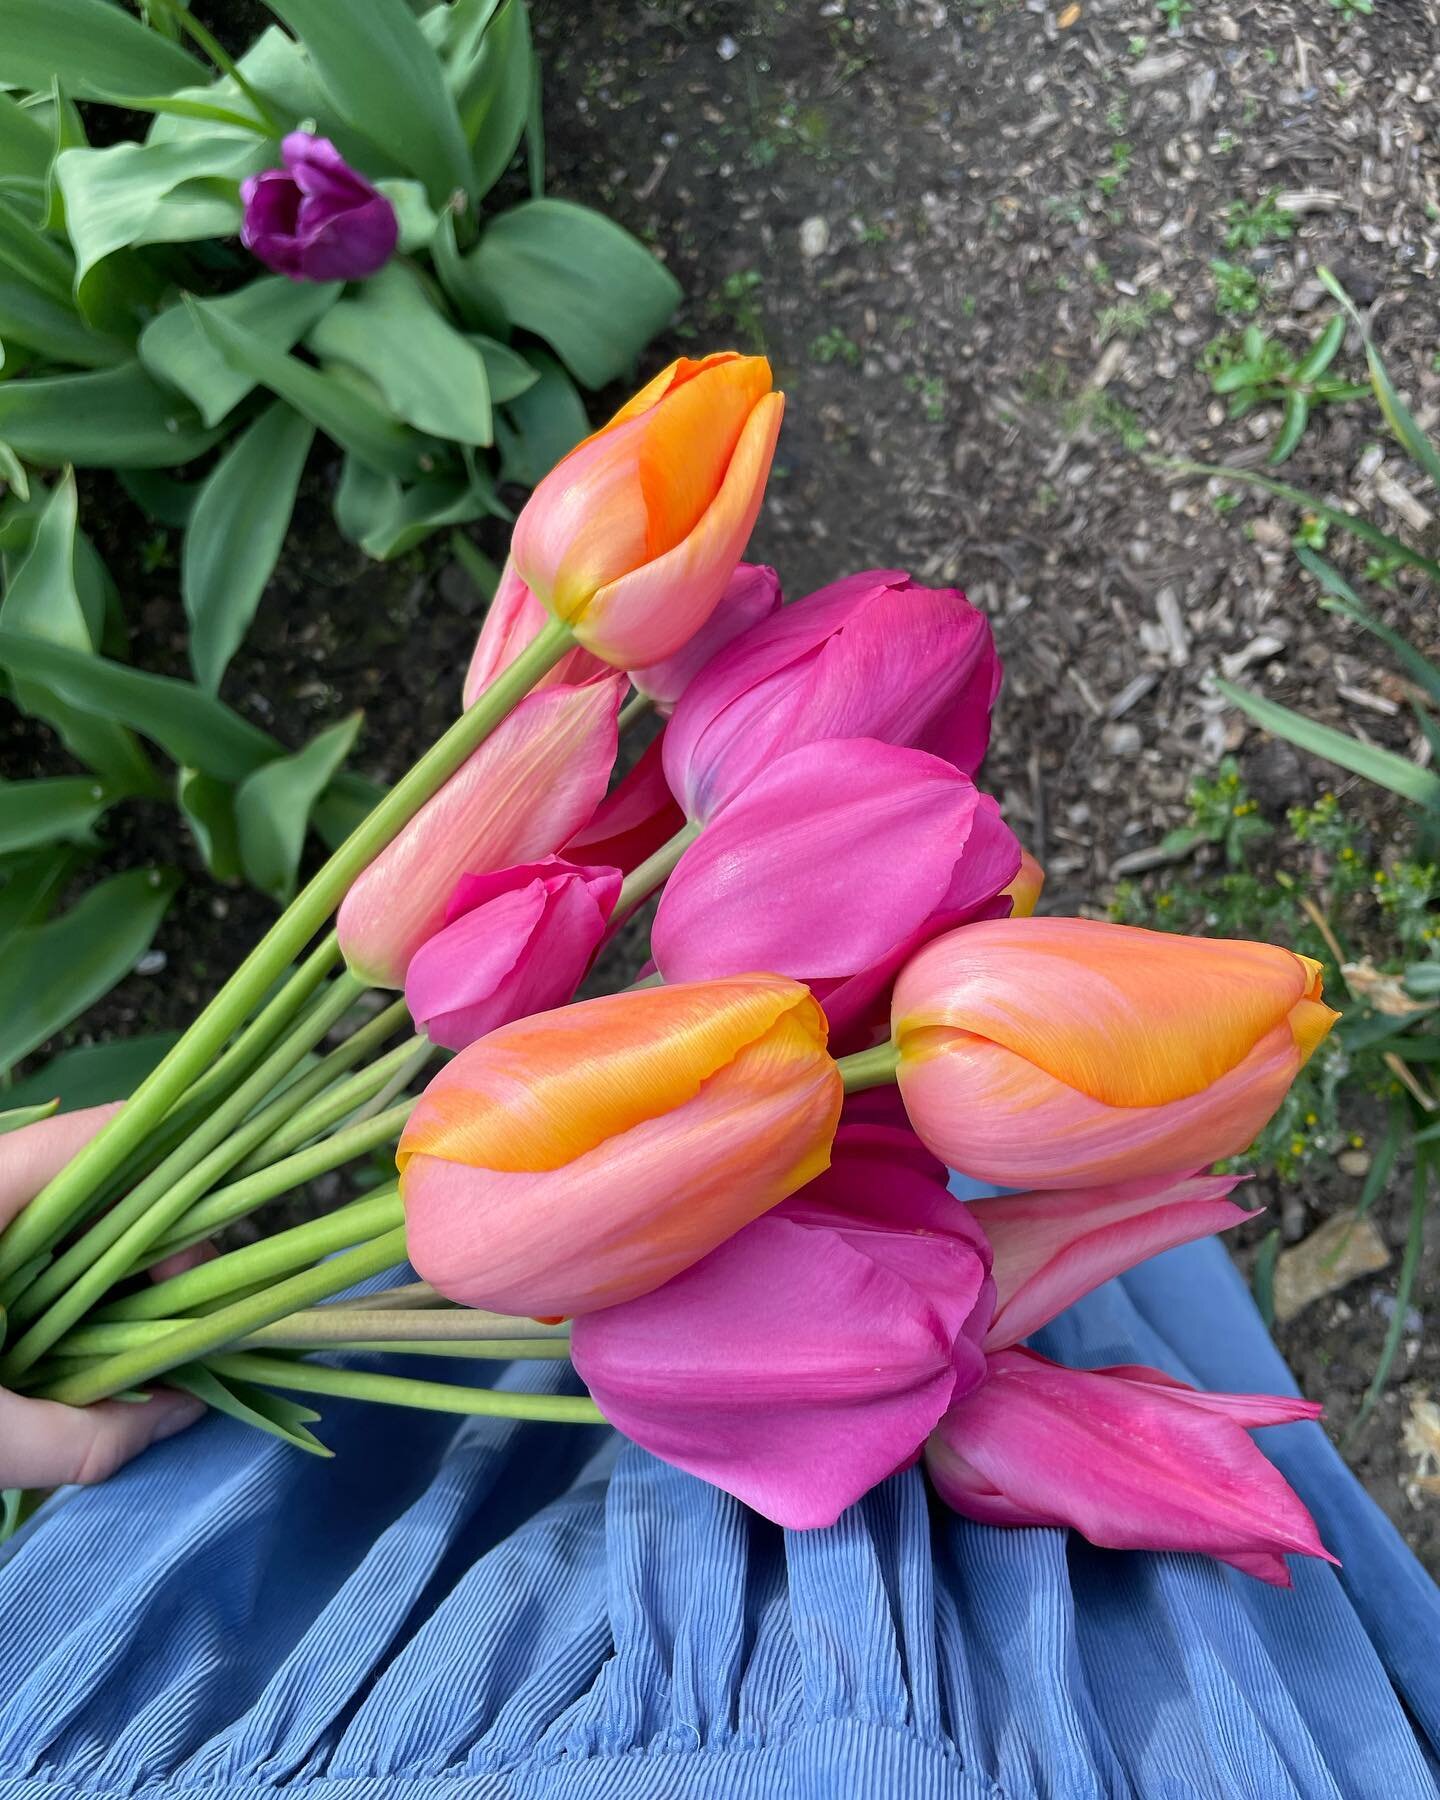 Still cutting Tulips in💄shades